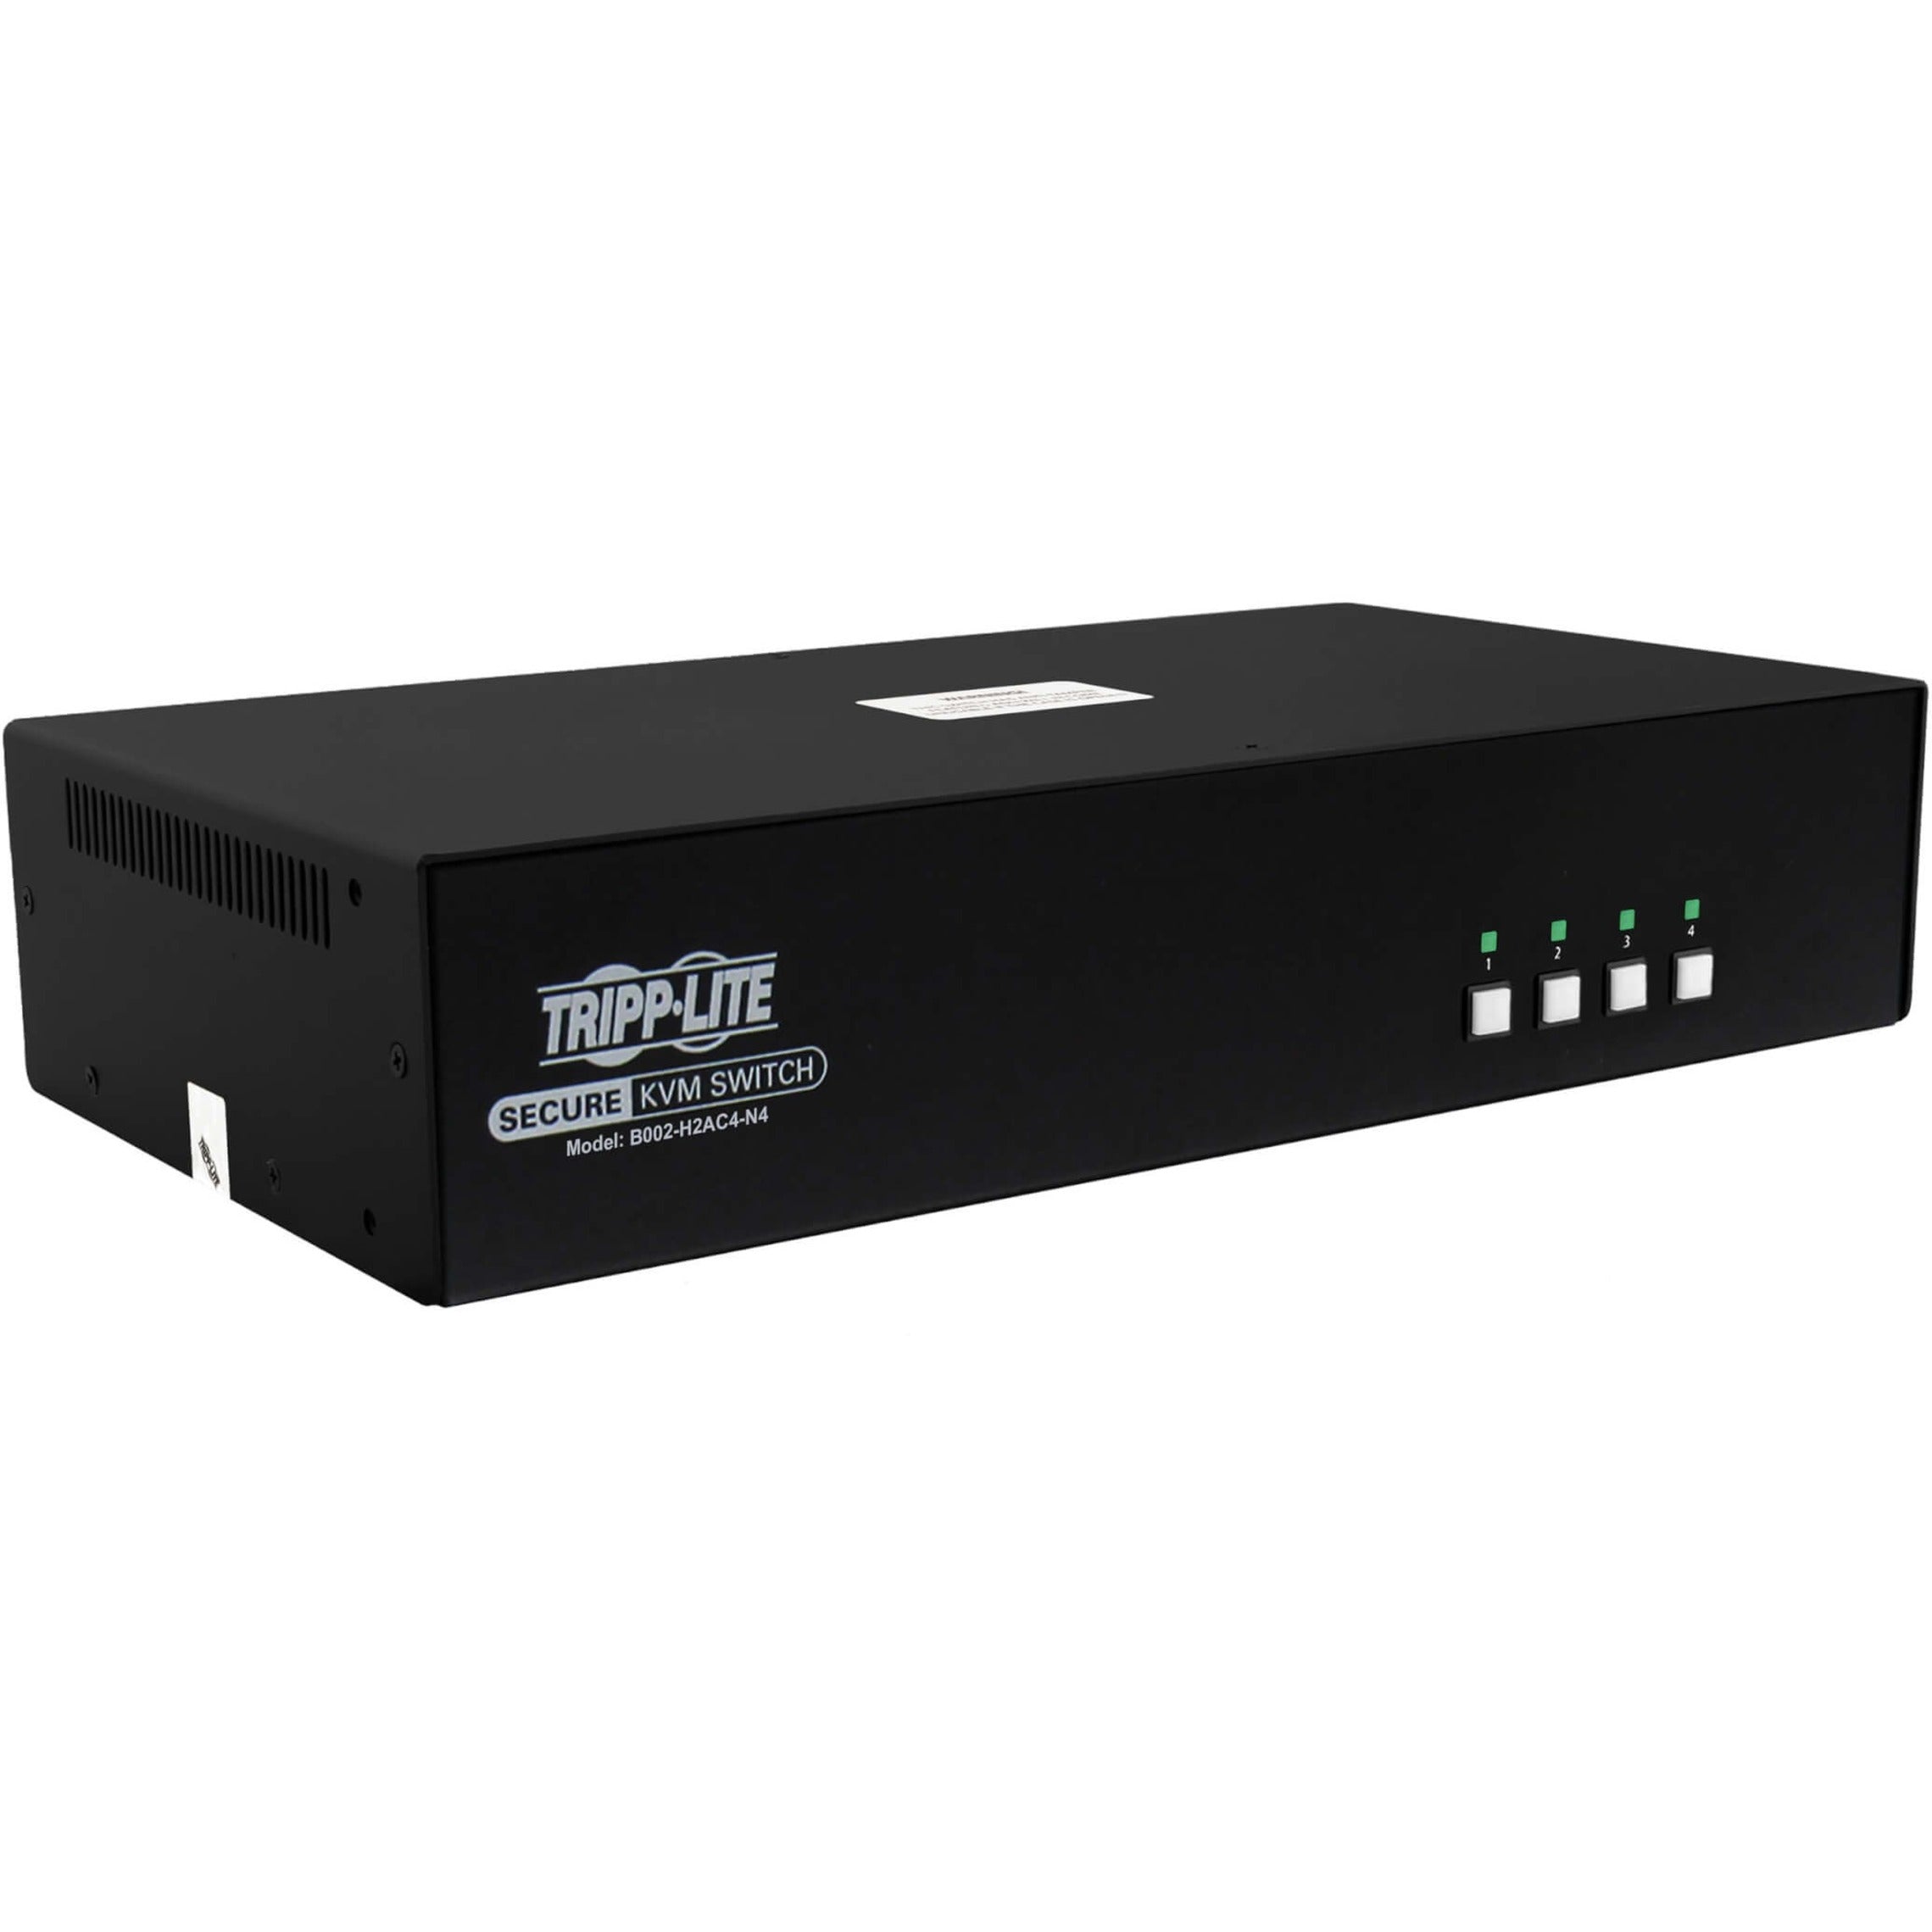 Tripp Lite - Conmutador KVM seguro B002-H2AC4-N4 4 puertos doble cabeza HDMI a HDMI 4K NIAP PP4.0 Audio CAC